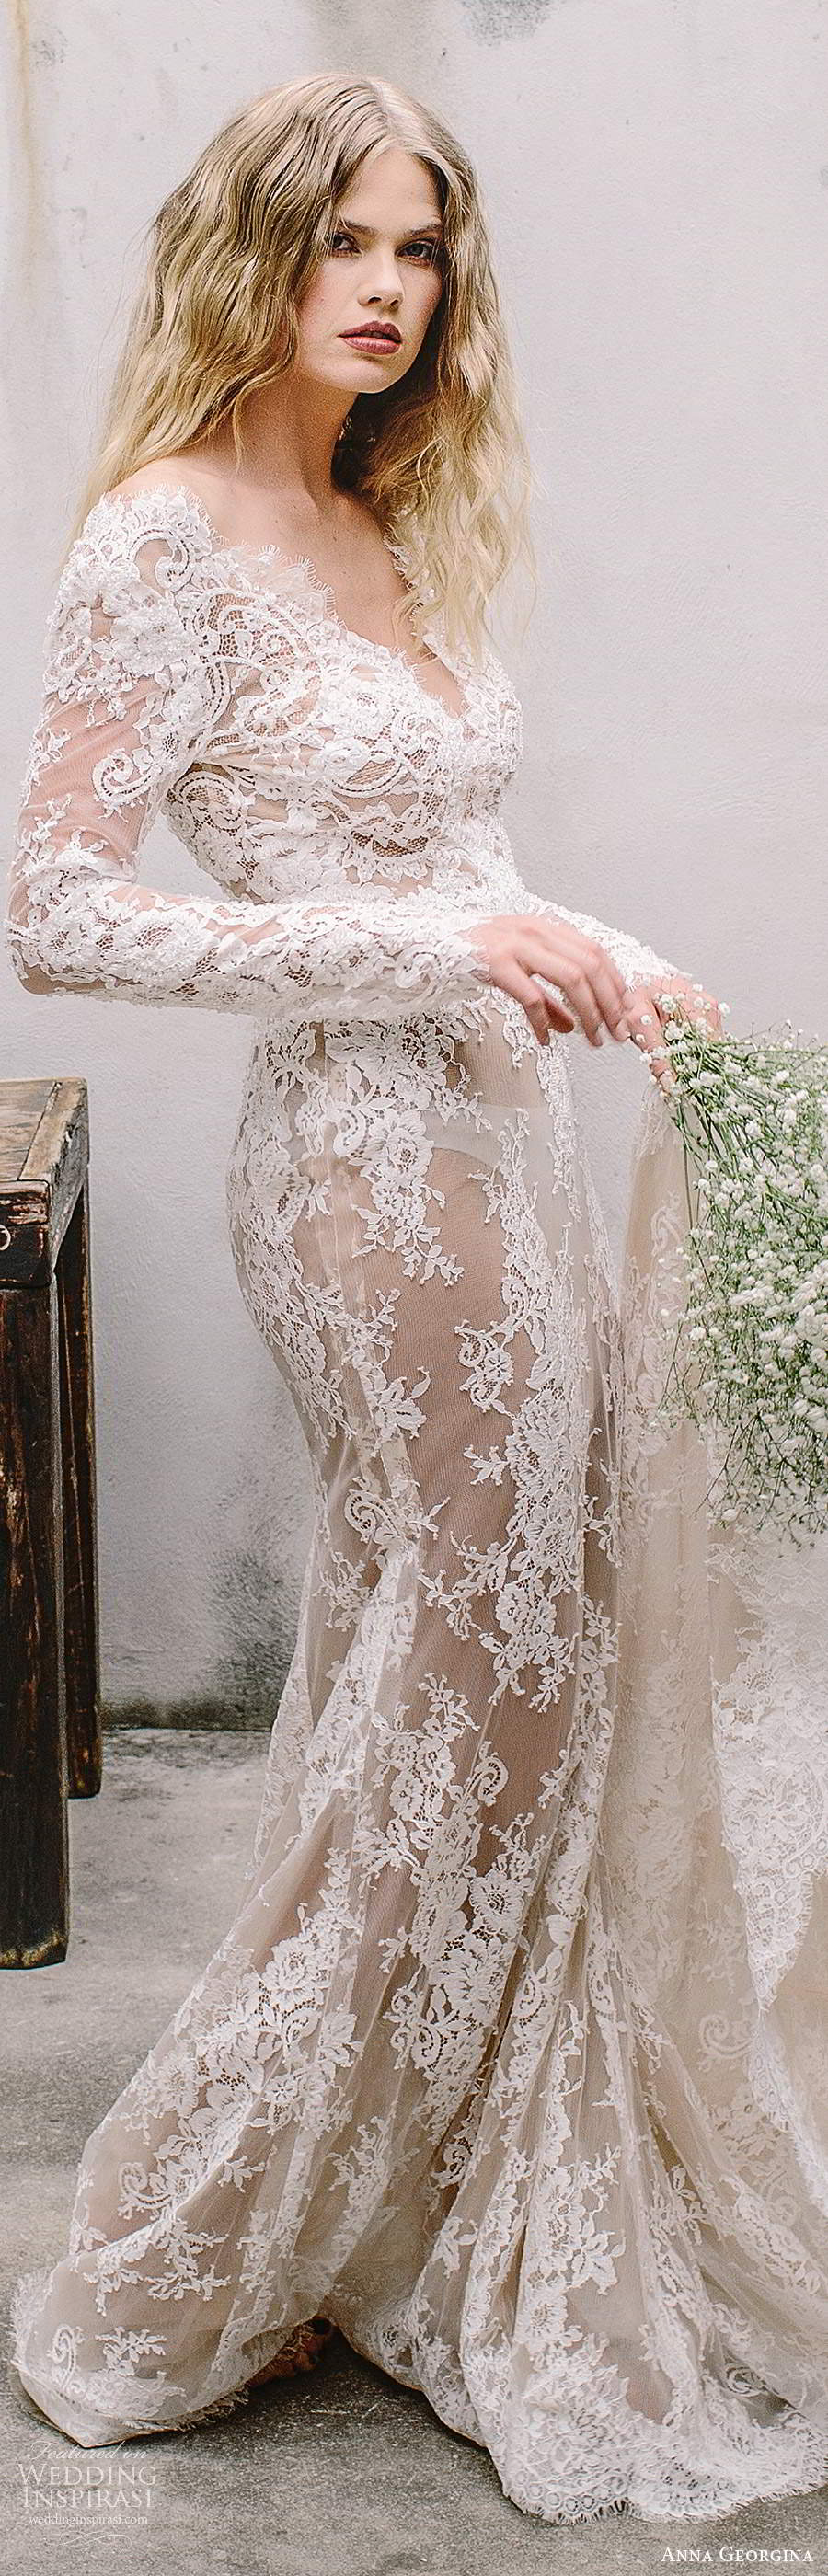 anna georgina 2021 bridal long sleeves off shoulder fully embellished lace sheath wedding dress chapel train (3) lv